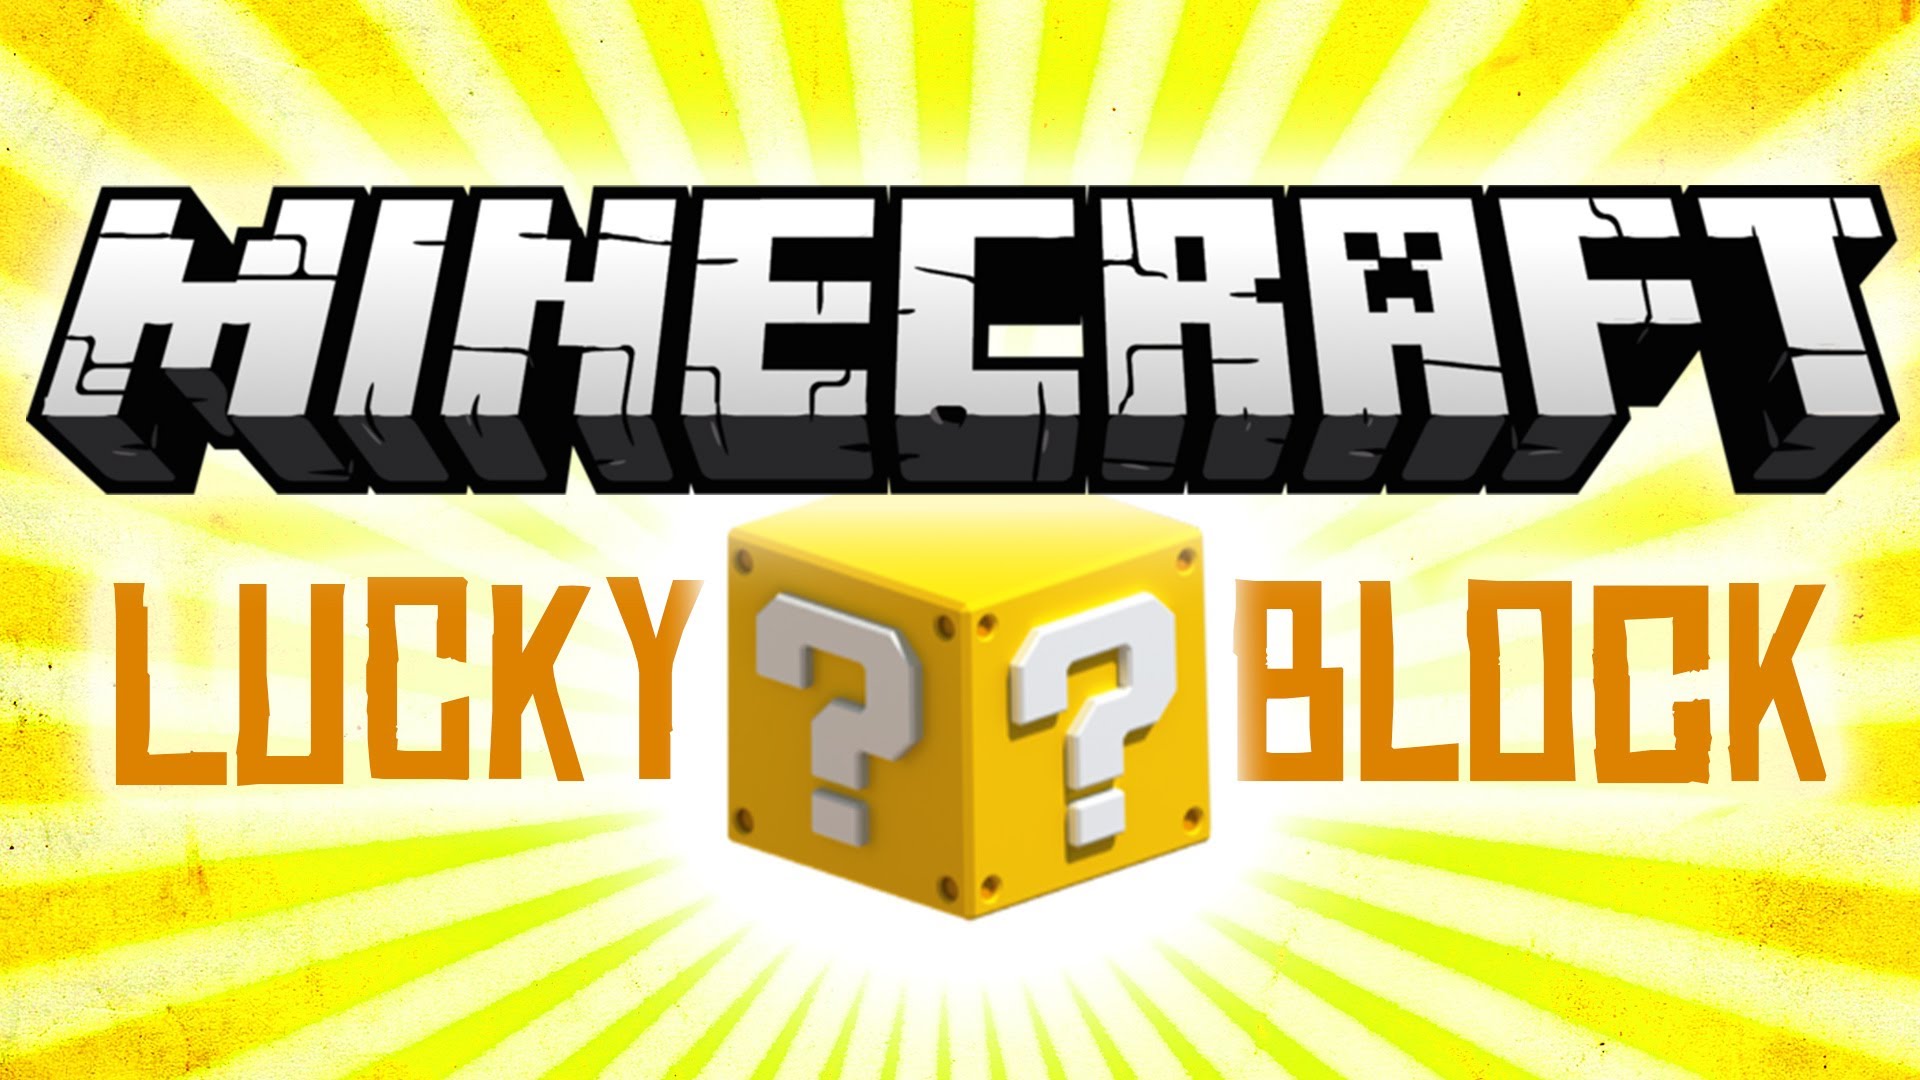 Lucky Block Mod - 1.12/1.11.2/1.10.2/1.9/1.8.9/1.8/1.7.10/1.6.4